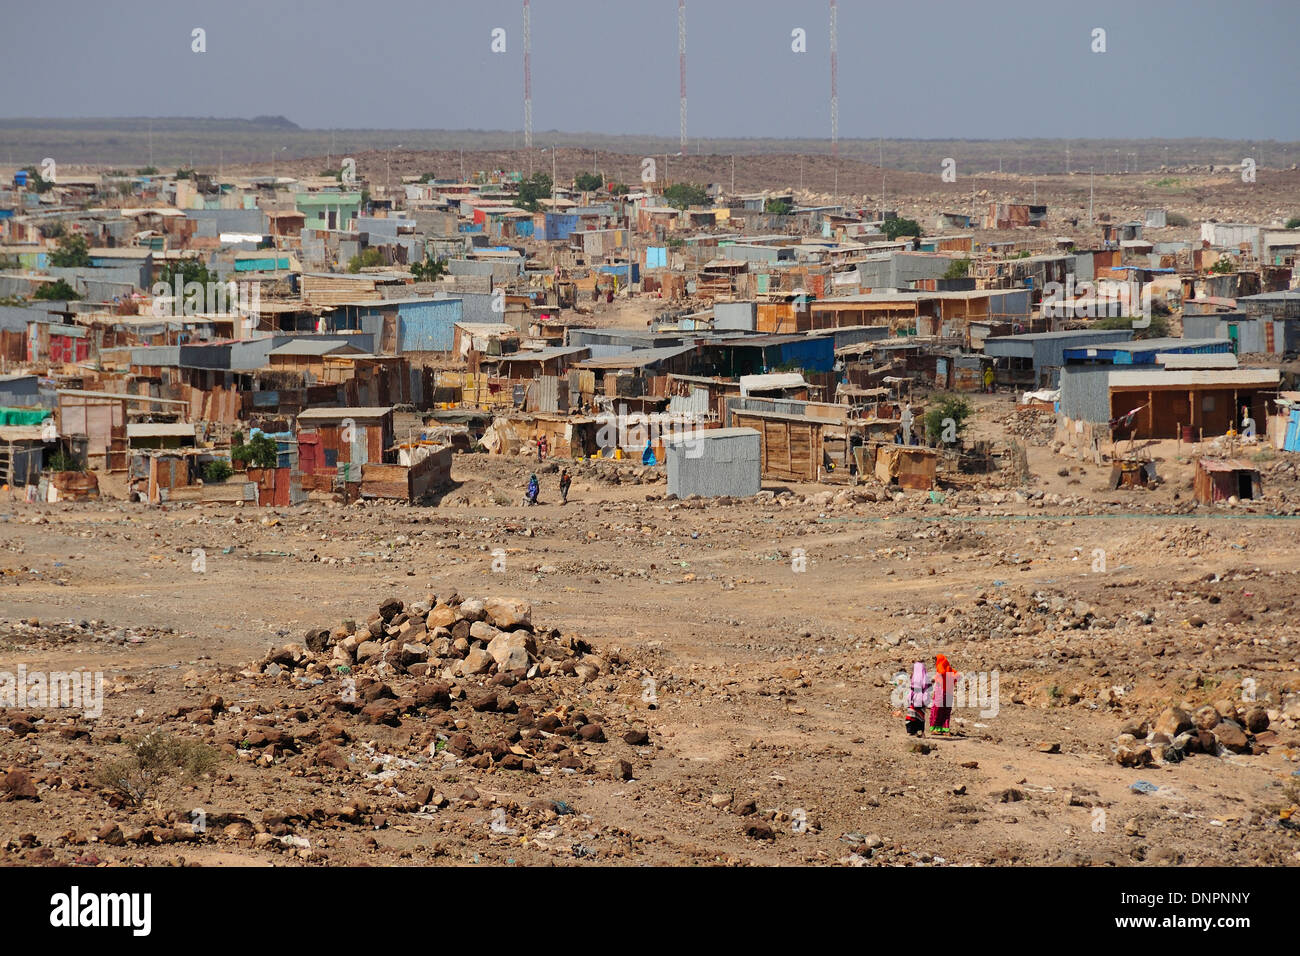 Makeshift Houses of Balbala district near Djibouti city, Djibouti, Horn of Africa Stock Photo